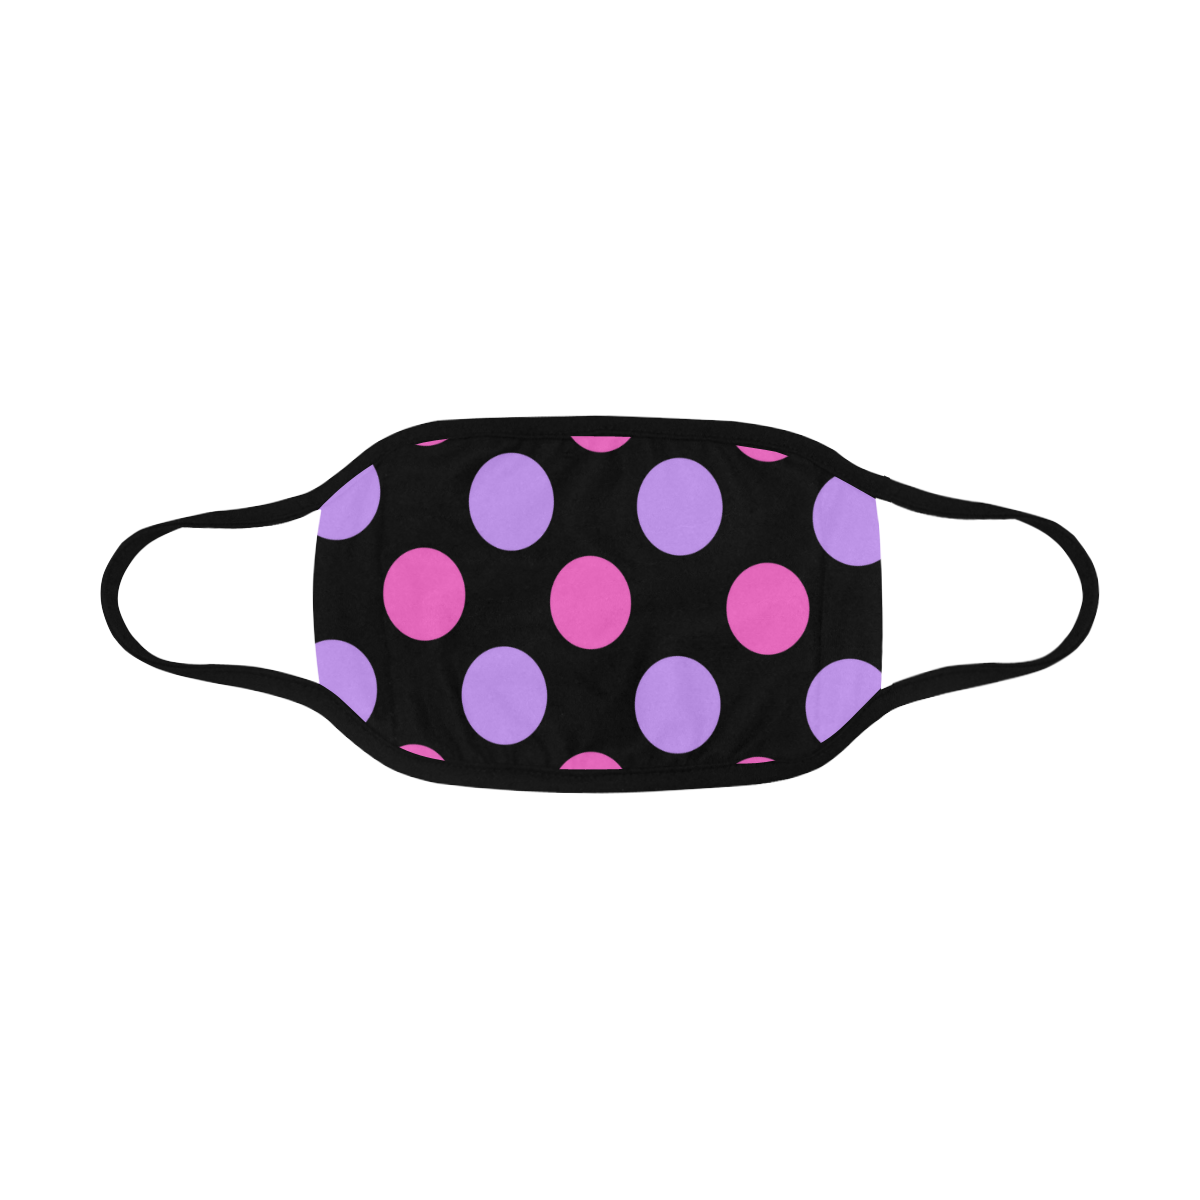 circle pattern lilac cc99ff and pink ff66cc Mouth Mask